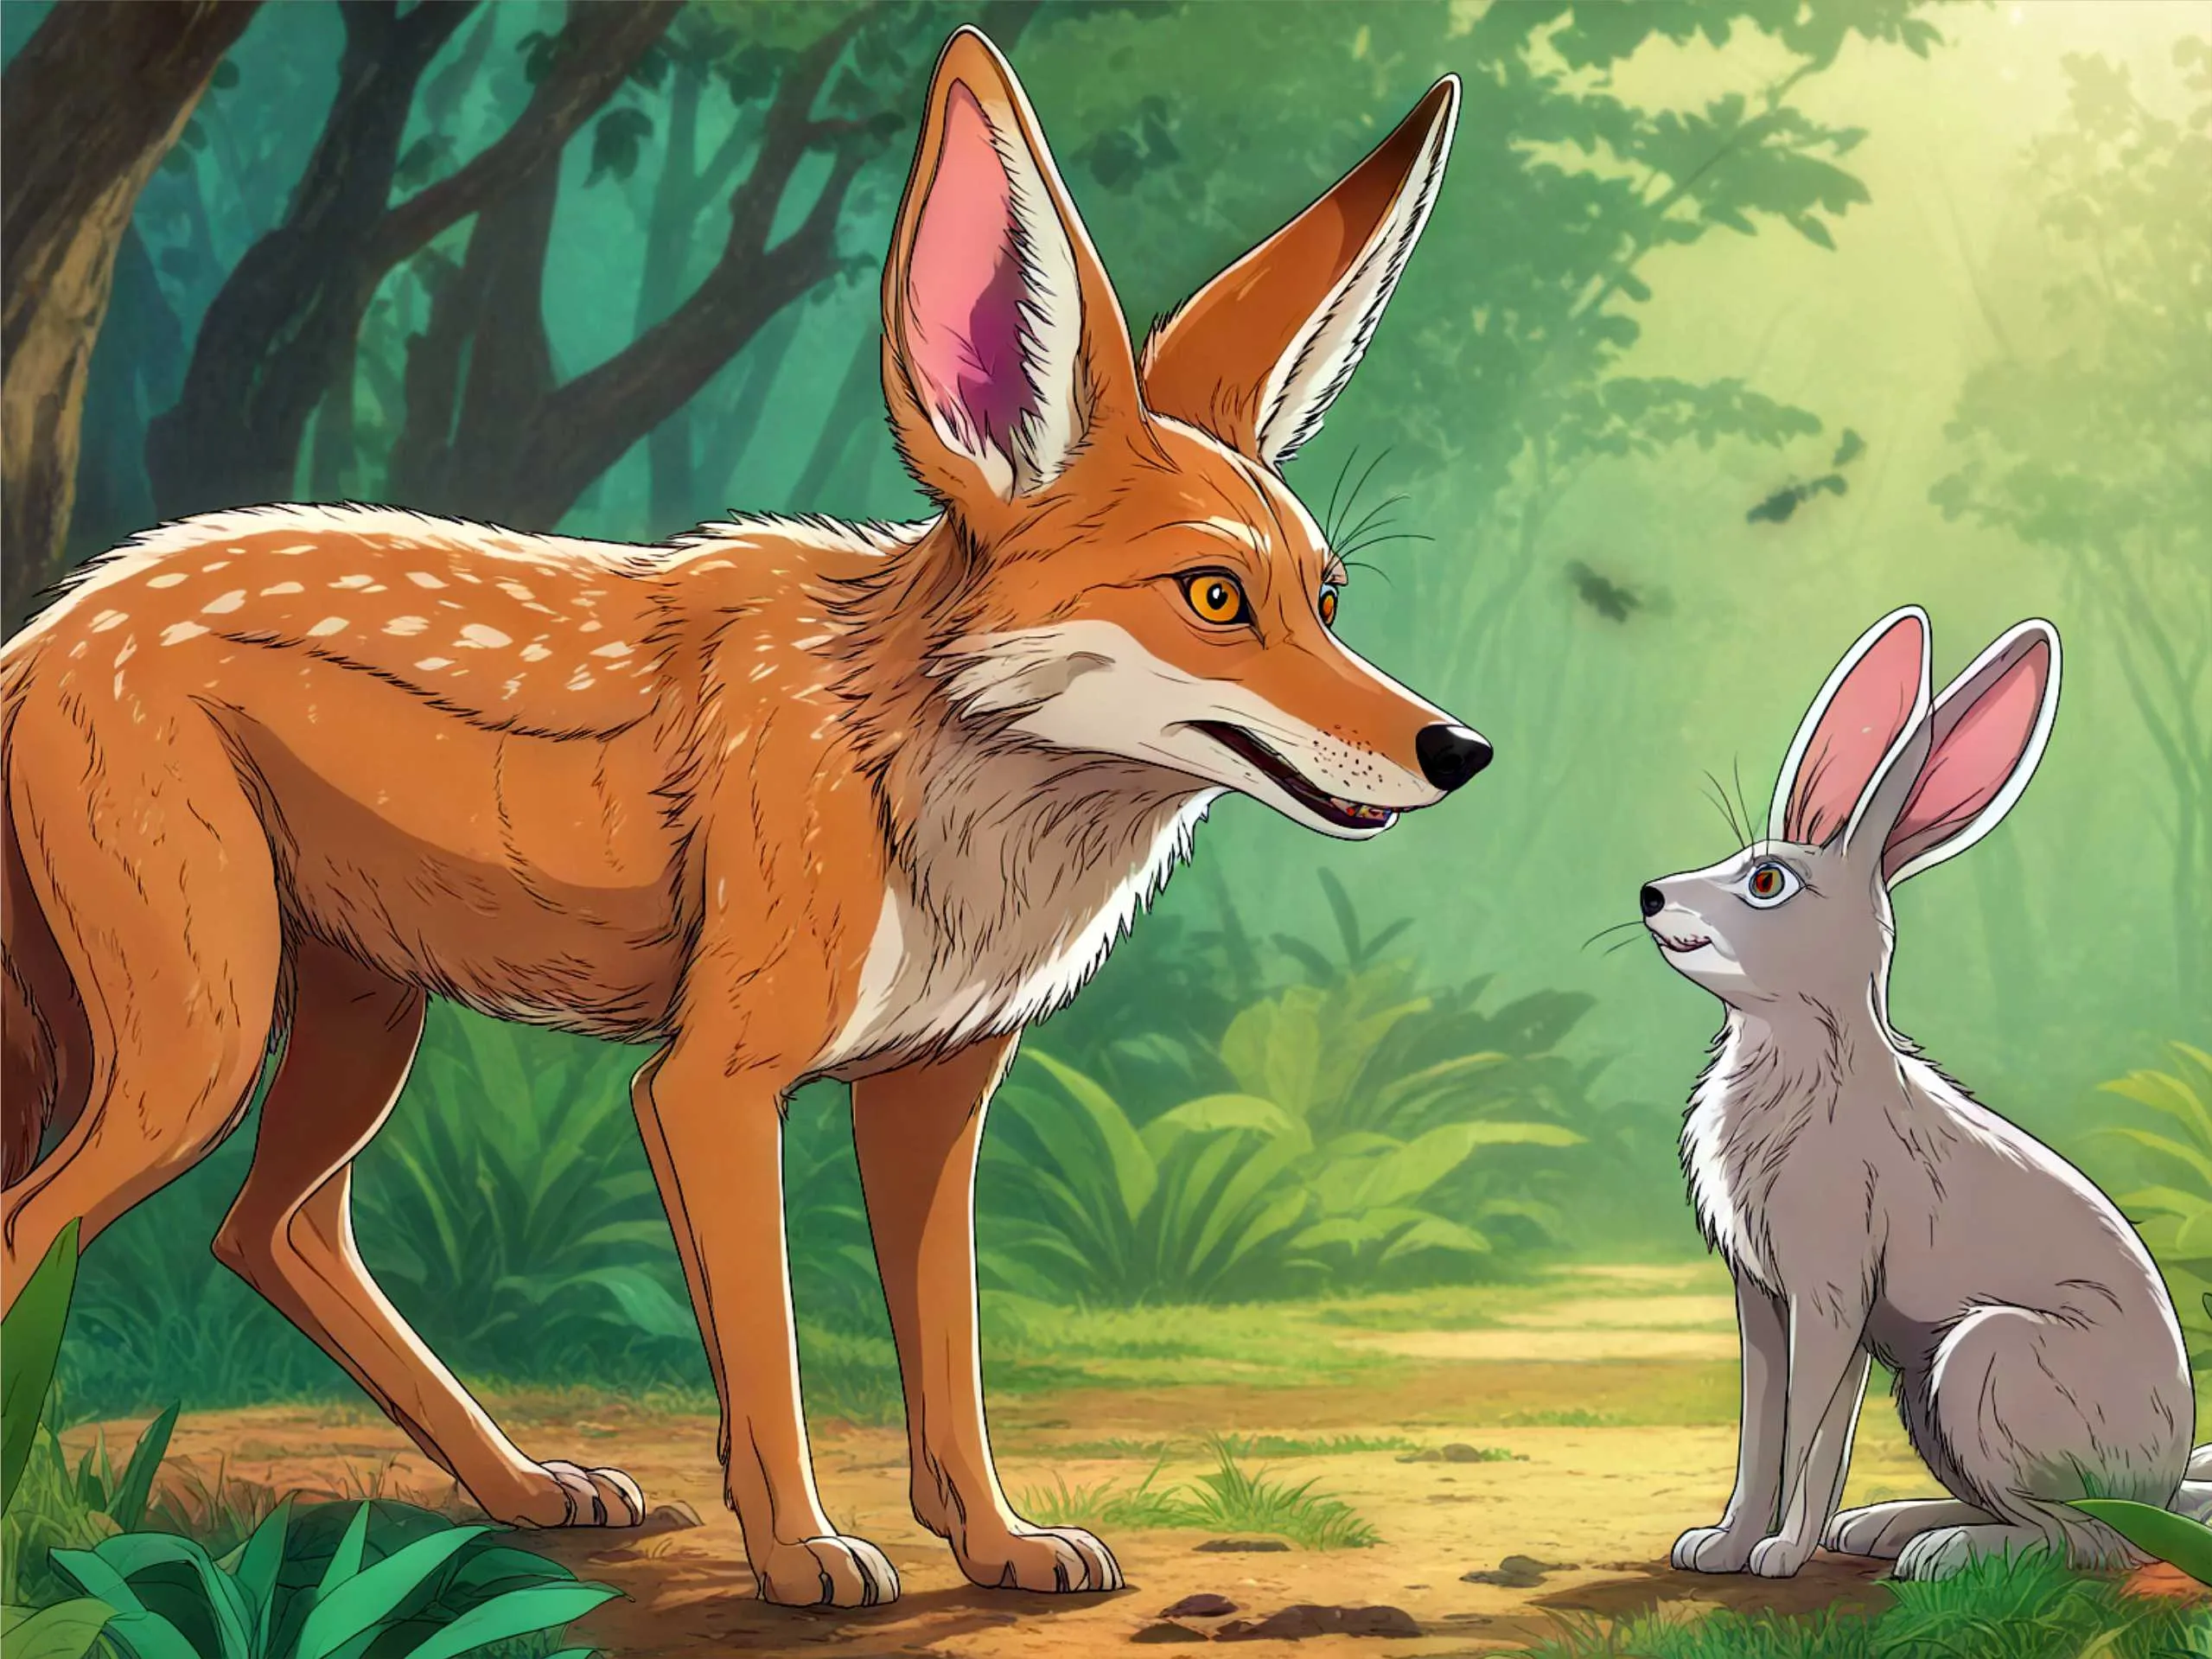 Cartoon image of a jackal and rabbit